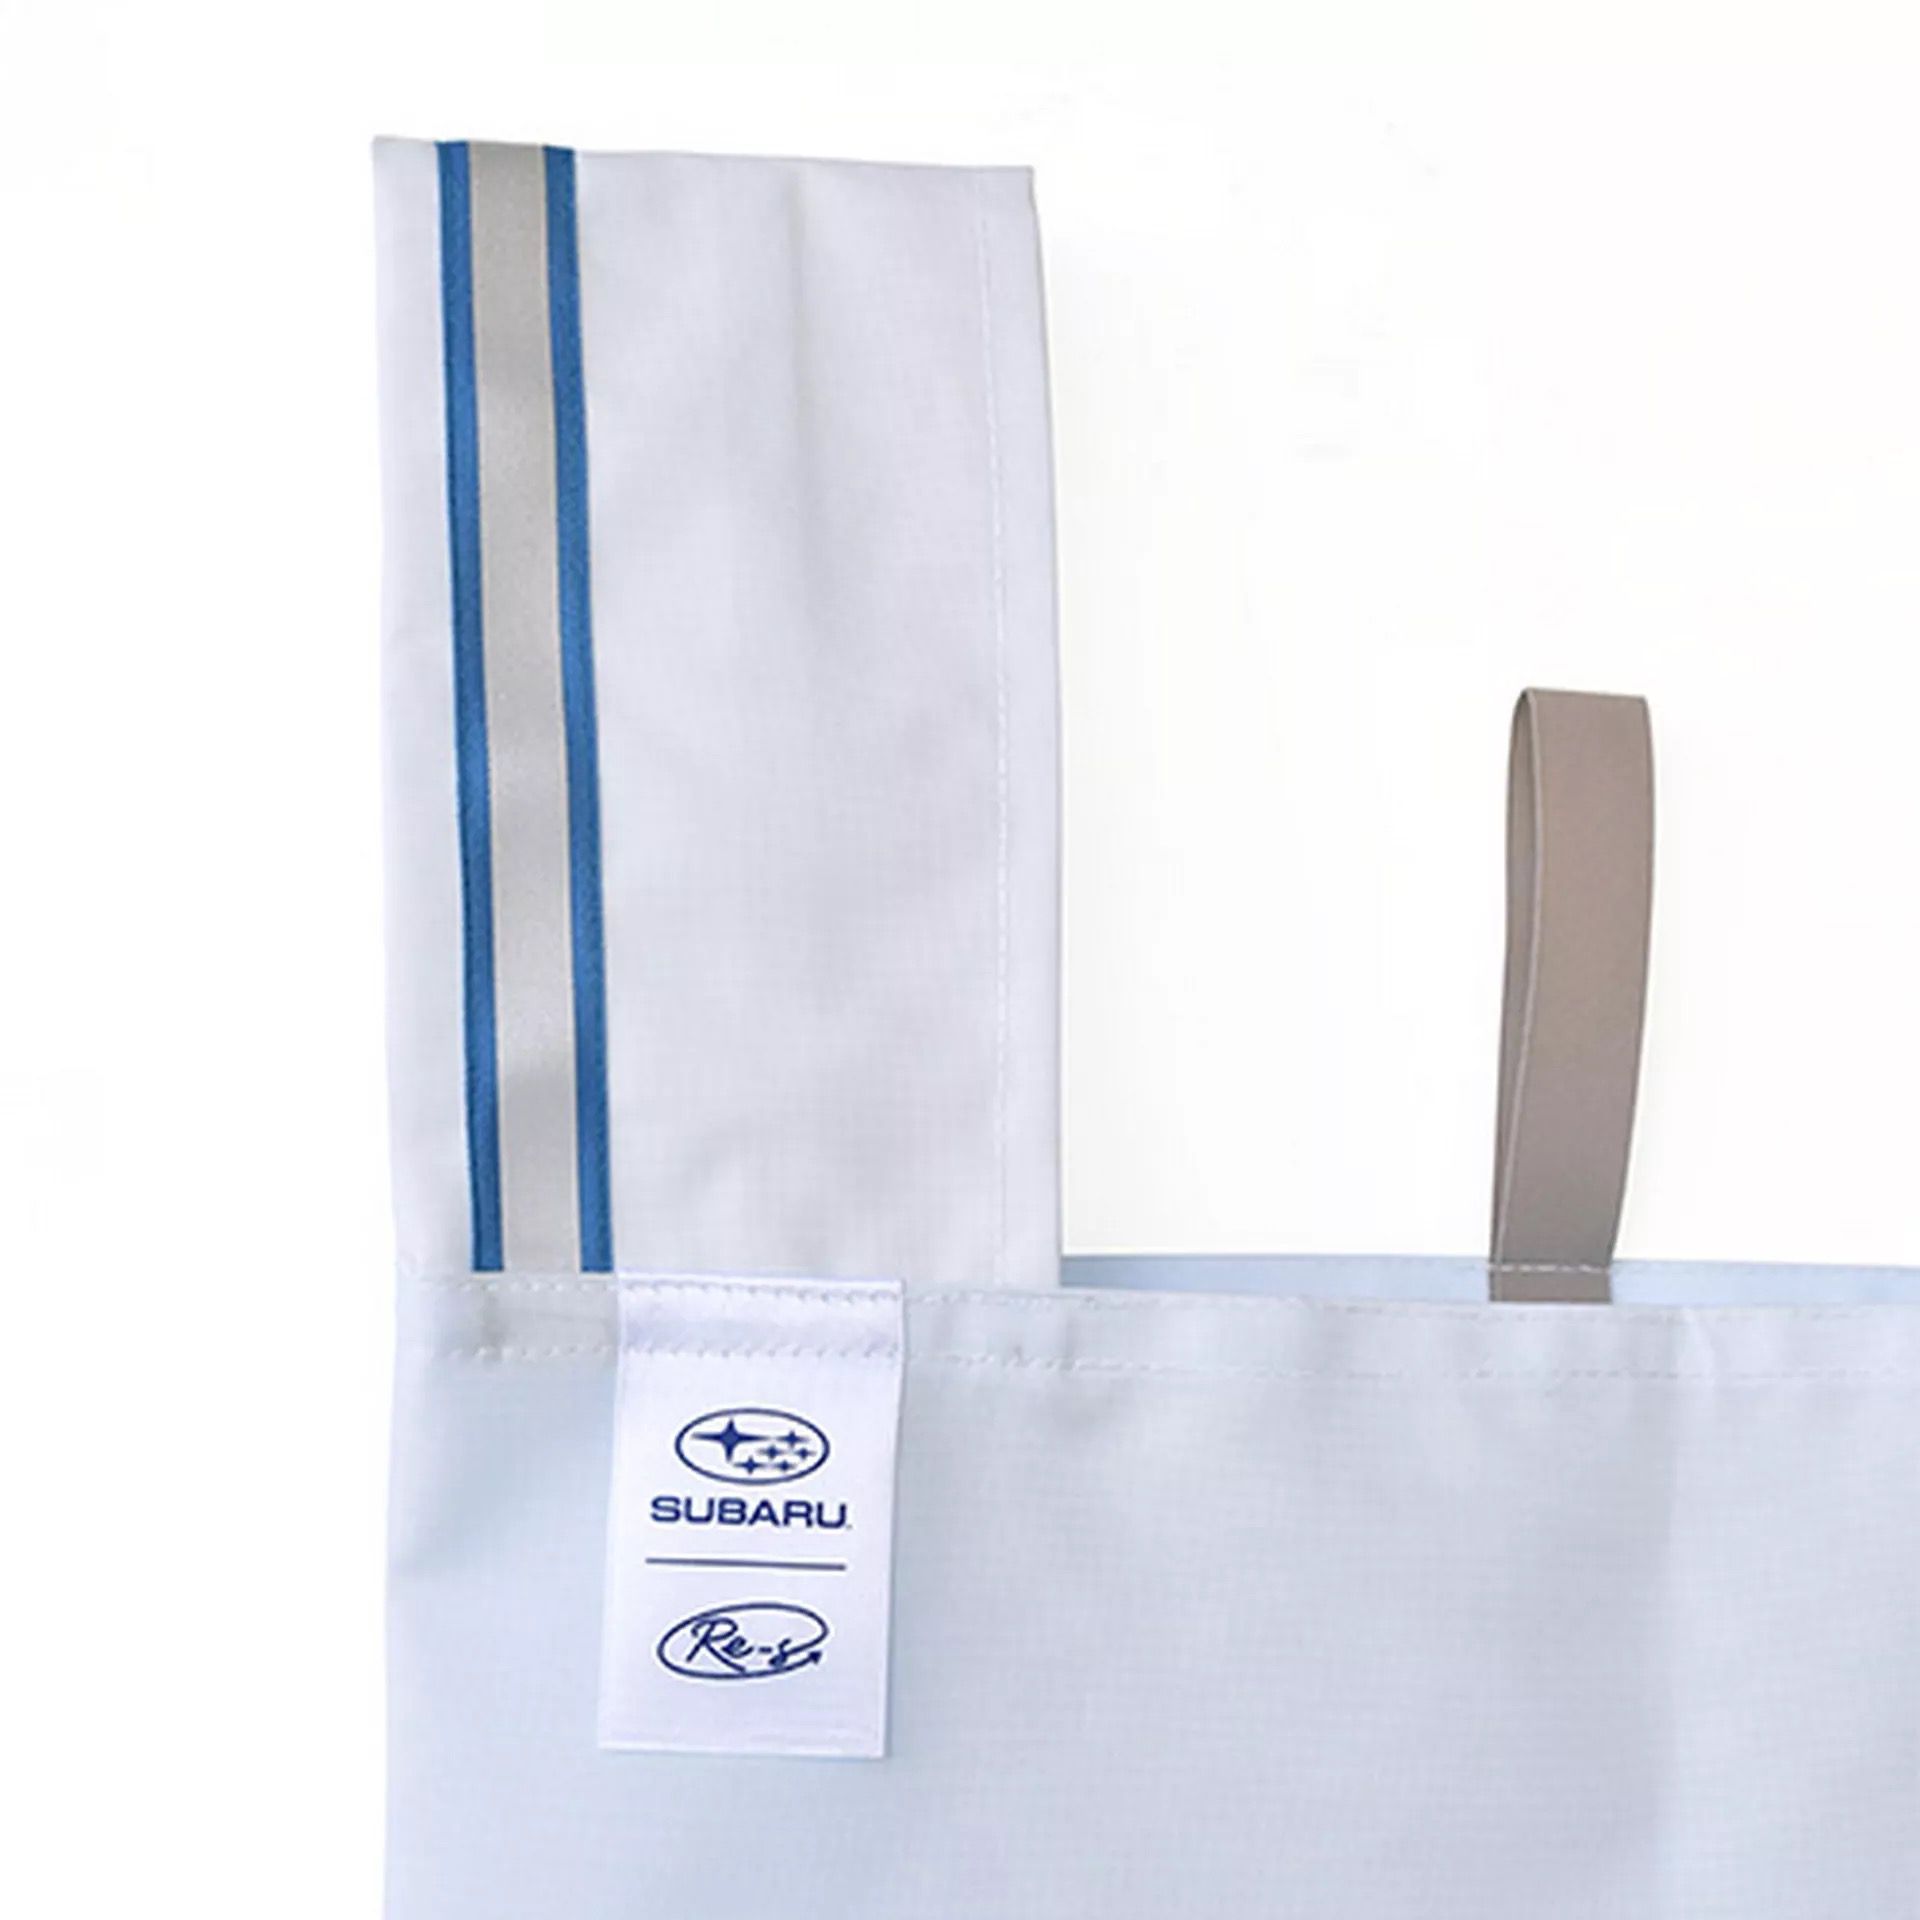 Subaru_Bag_Airbag_Fabric-3